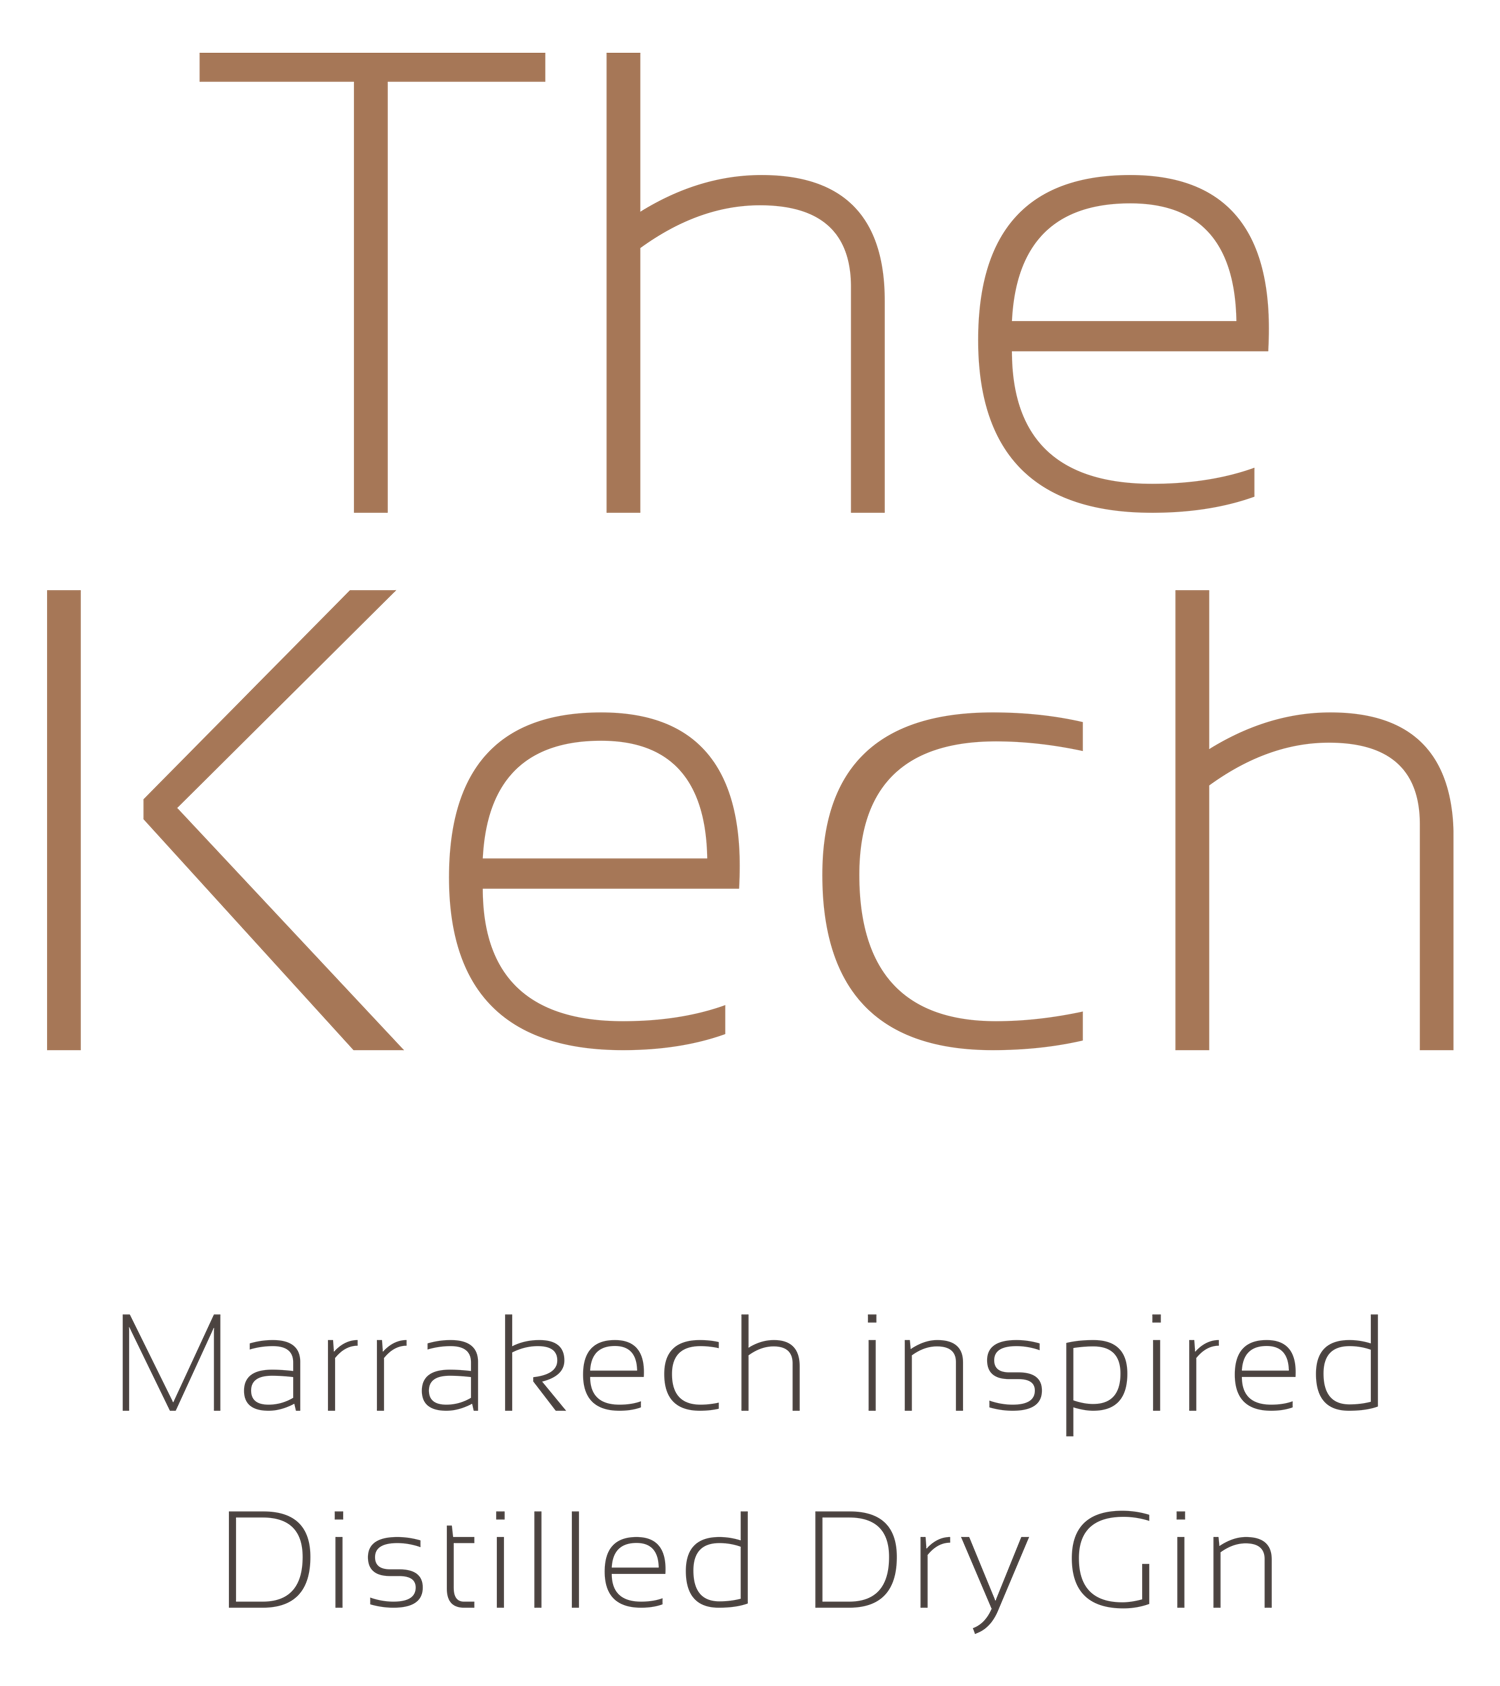 The Kech